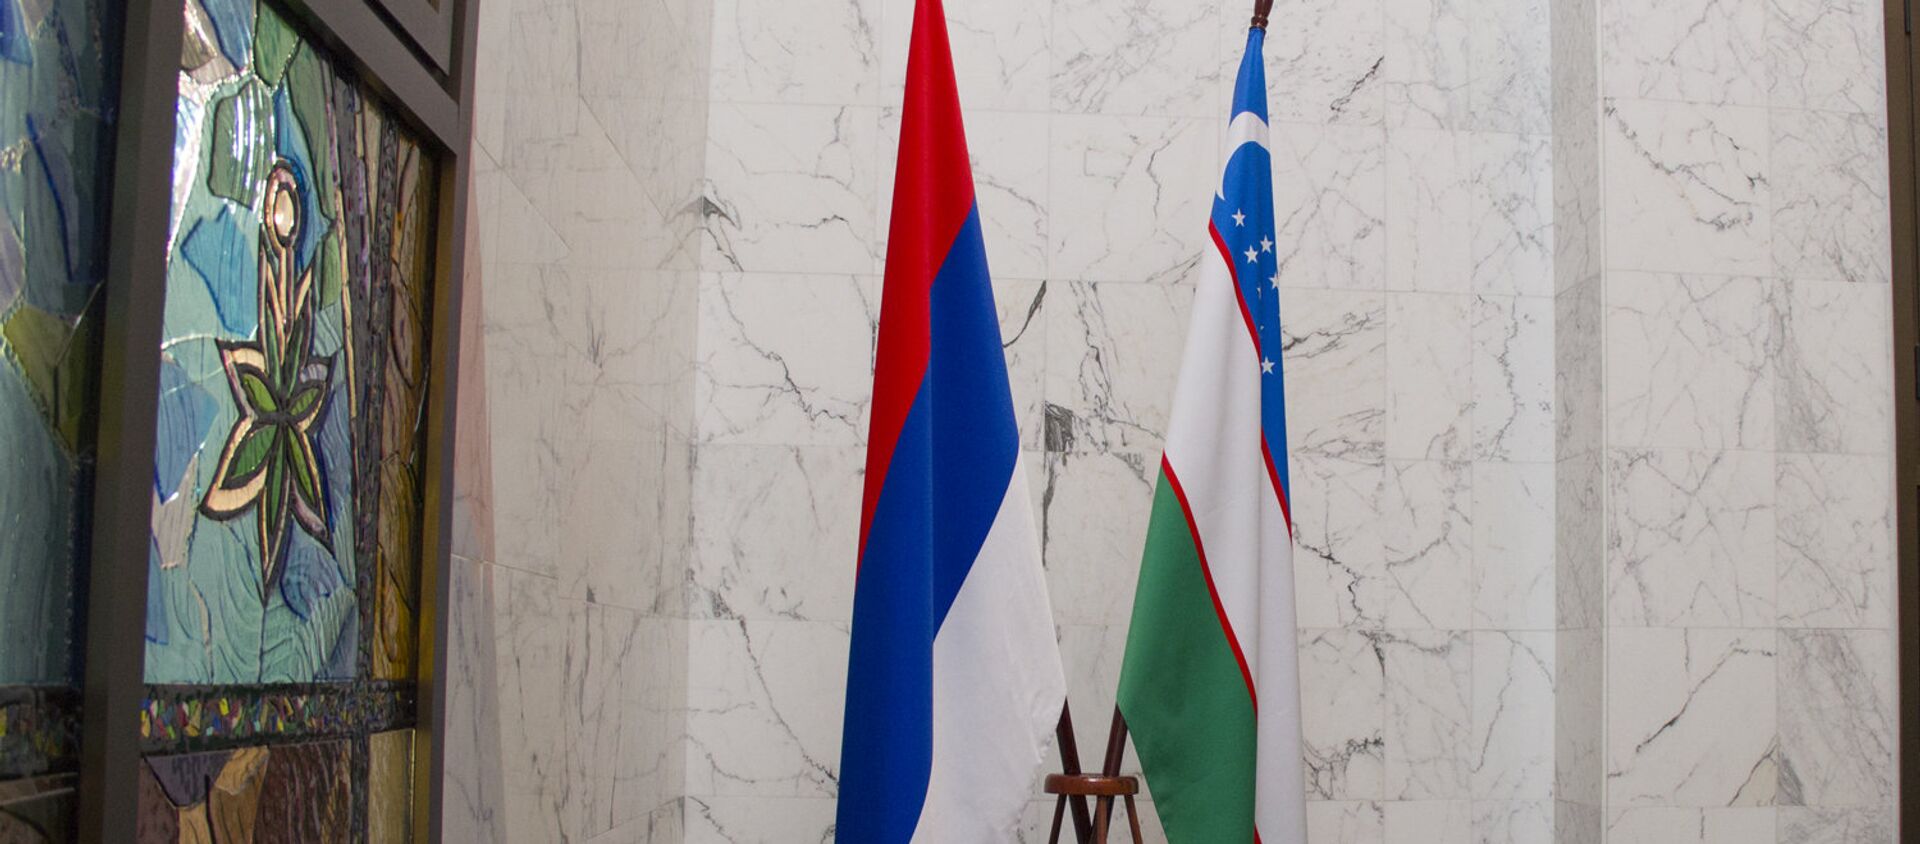 Российский и Узбекский флаги - Sputnik Узбекистан, 1920, 14.01.2021